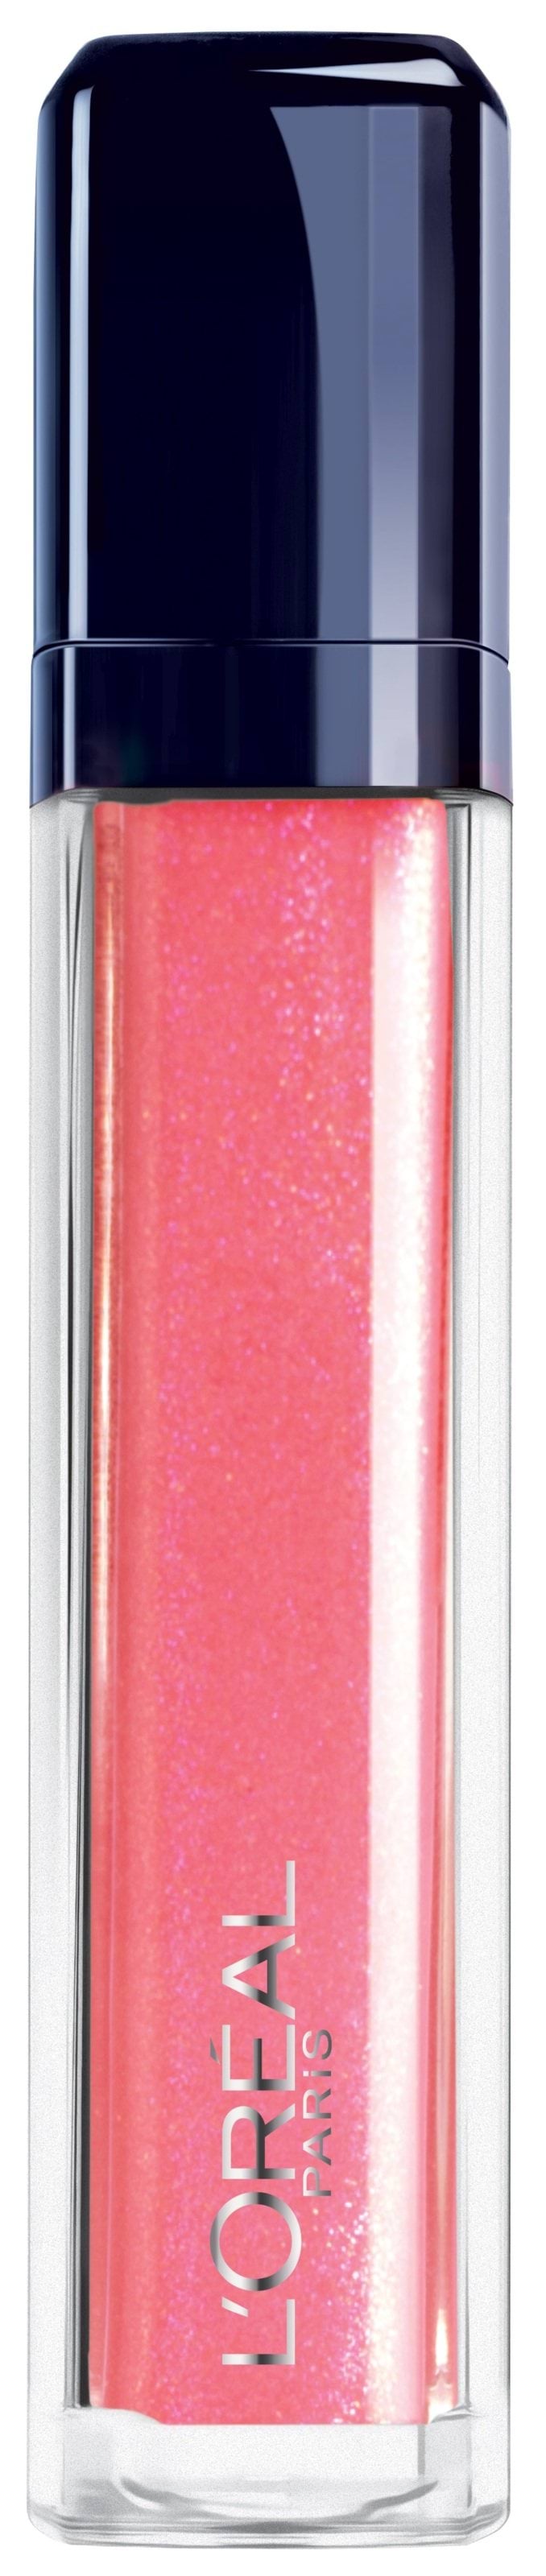 Блеск для губ L'Oréal Paris Glam Shine, 8 мл